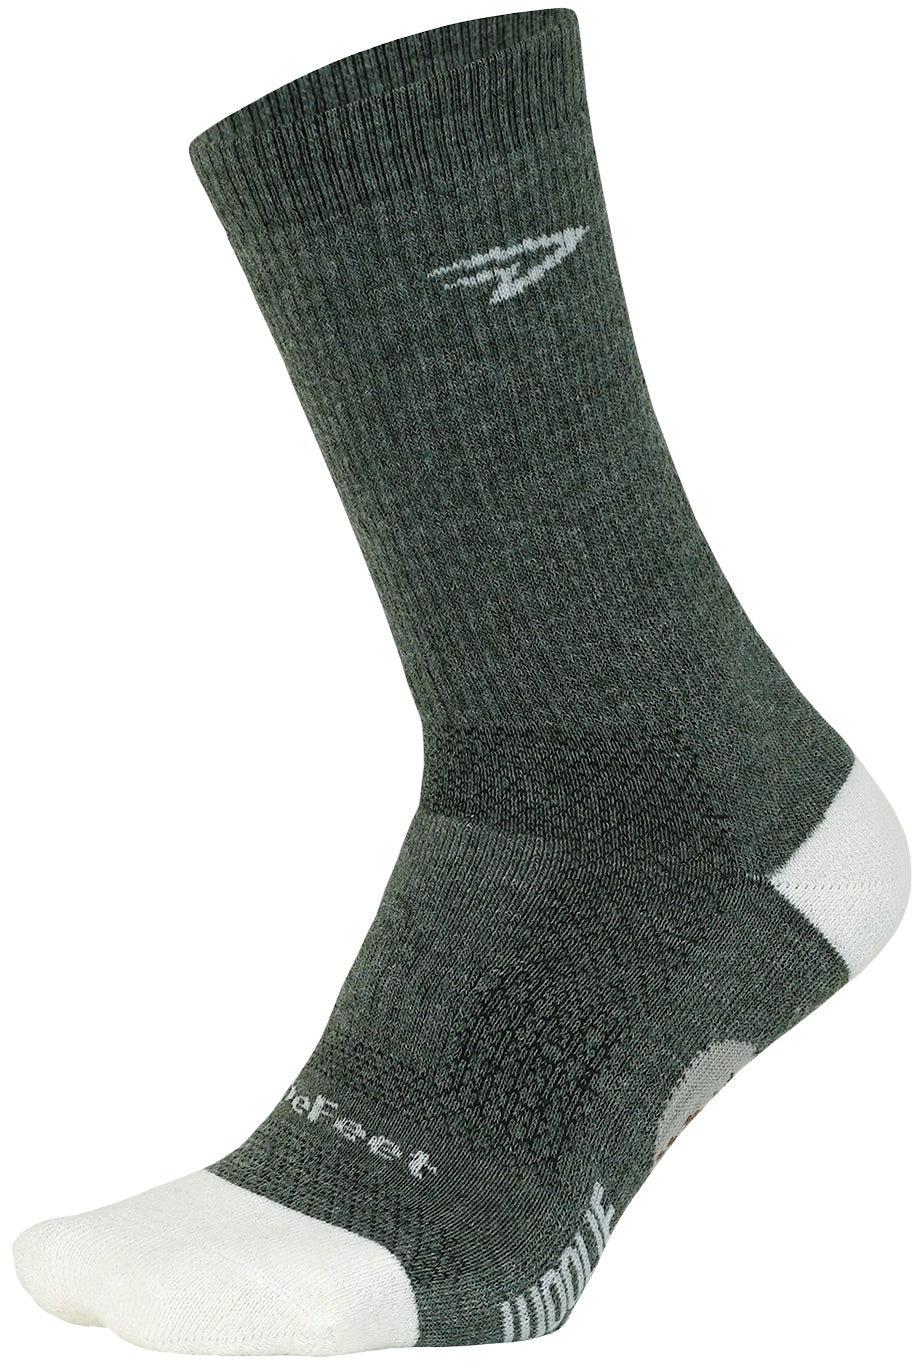 Defeet Woolie Boolie Comp 6 Socks - Loden/natural